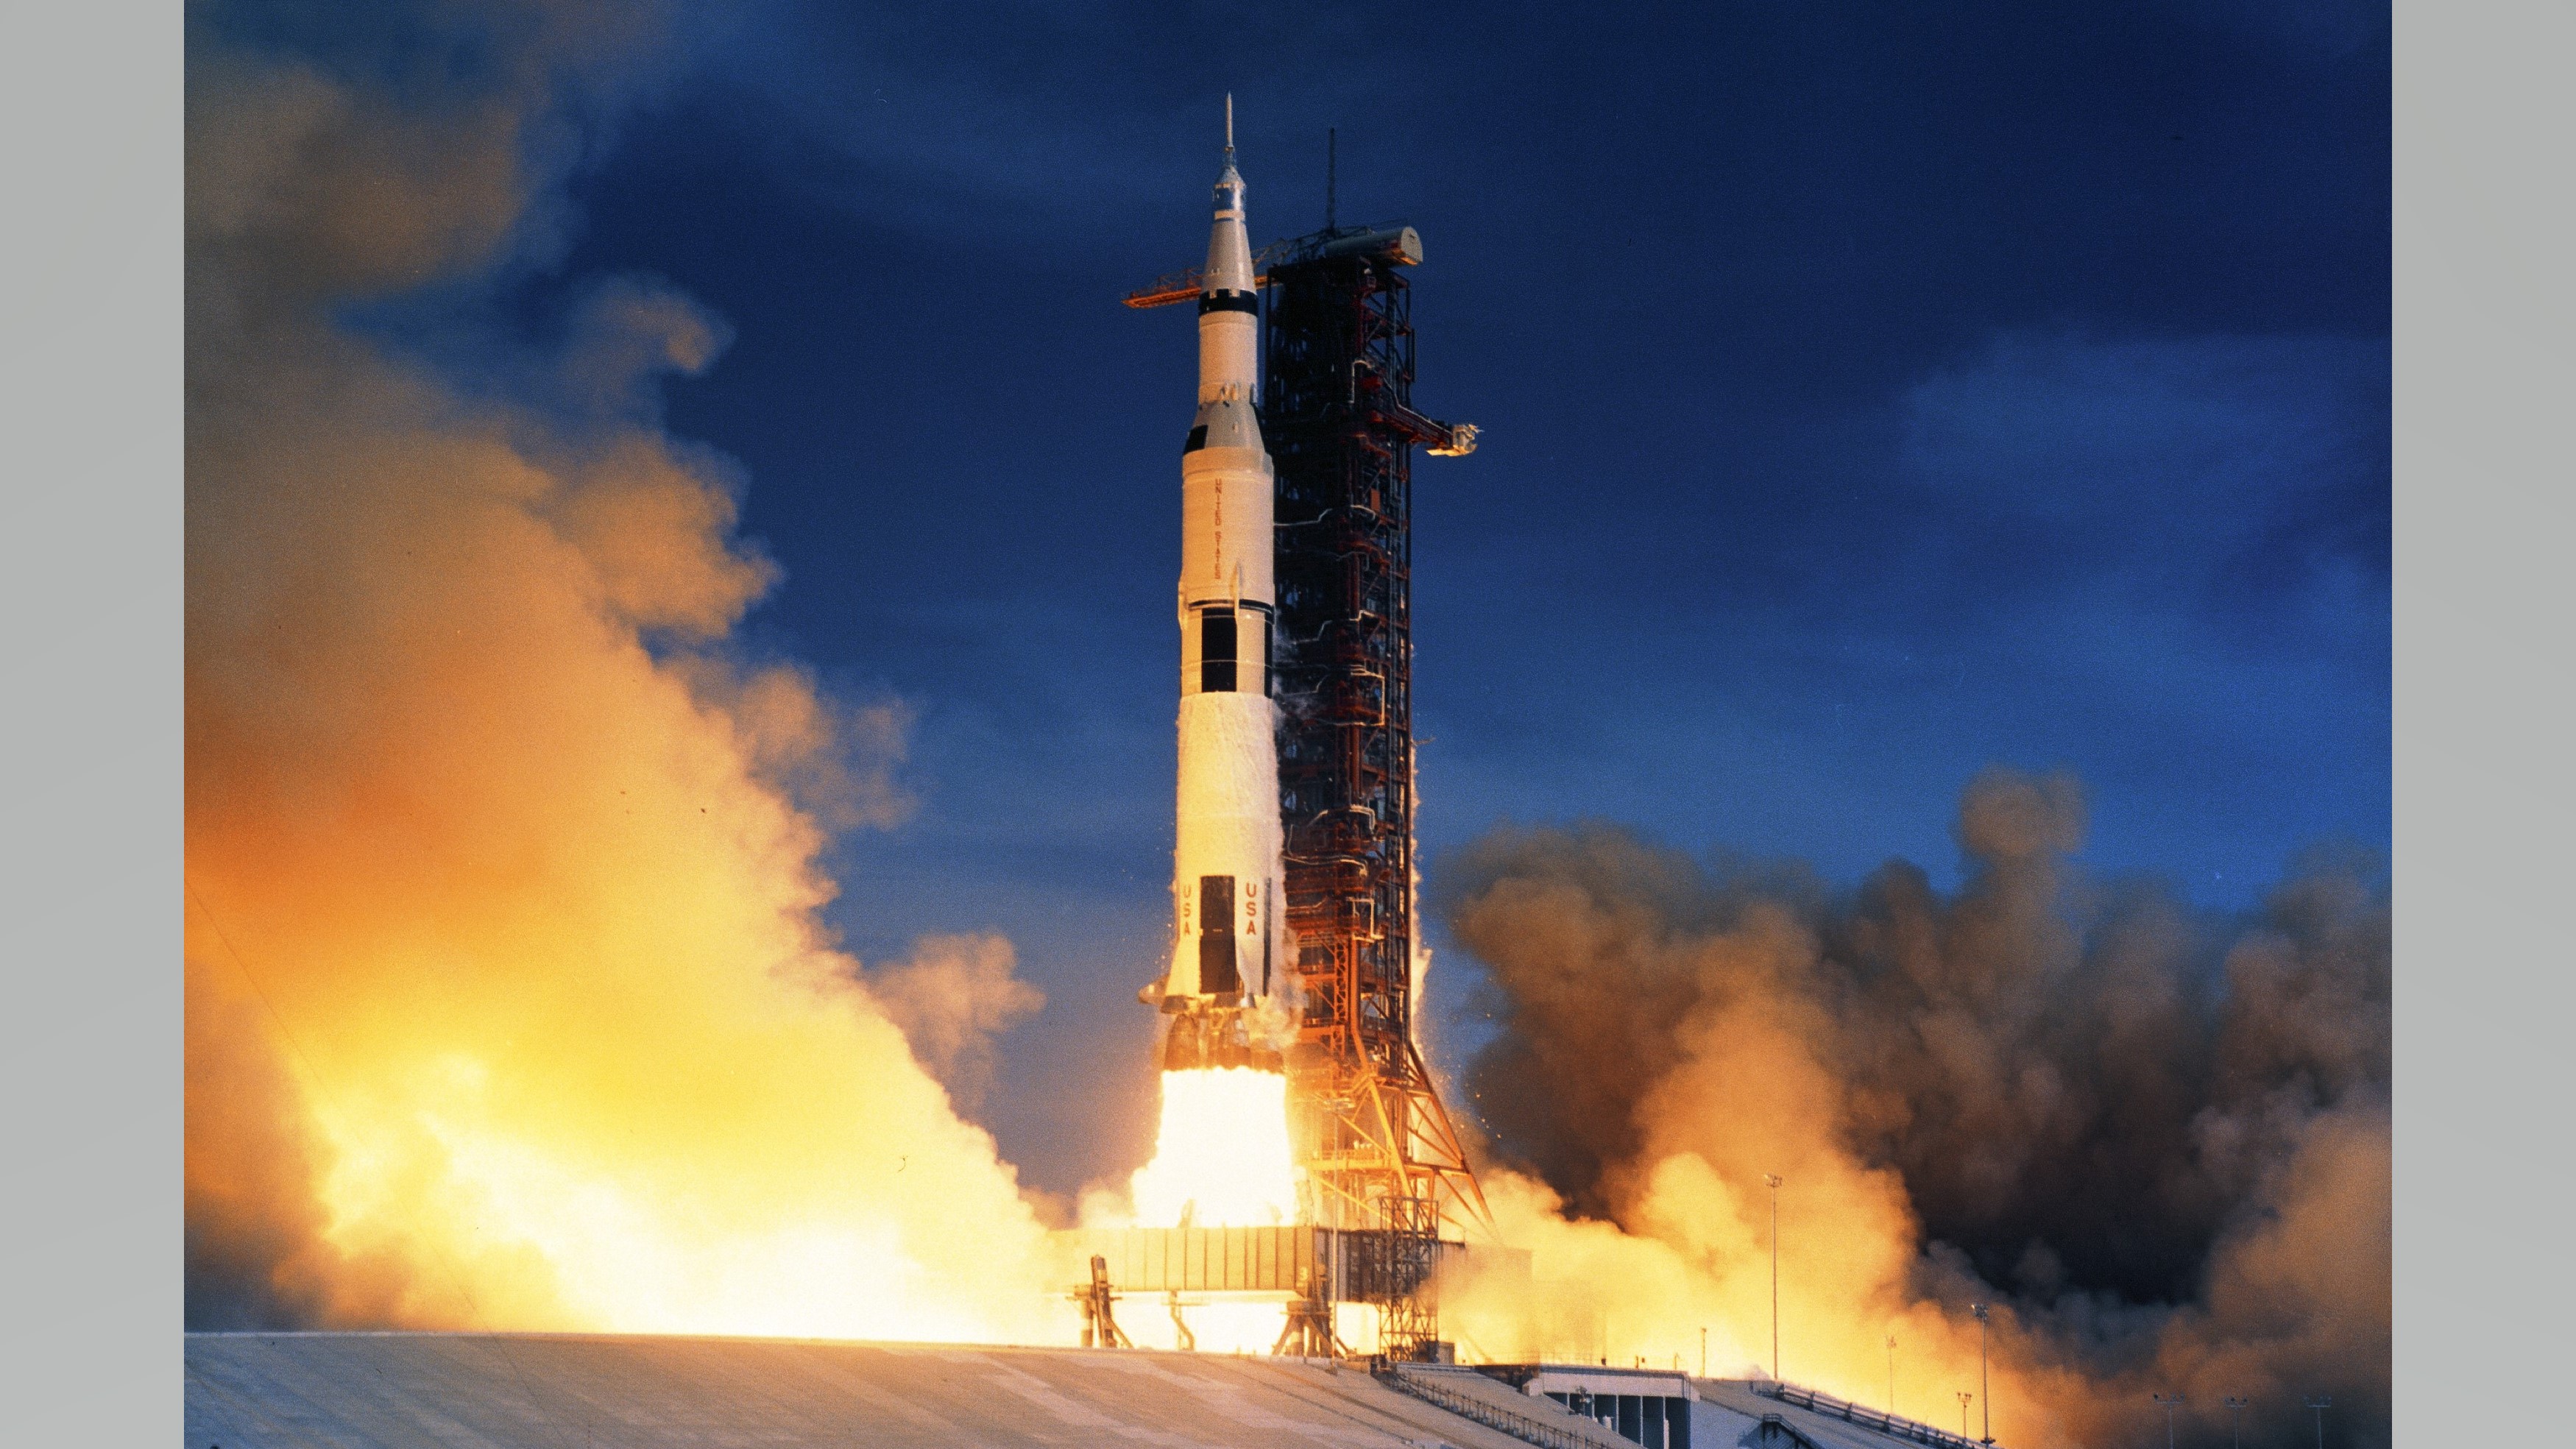 No, NASA's massive Saturn V rocket didn't melt concrete with sound or set fires a mile away